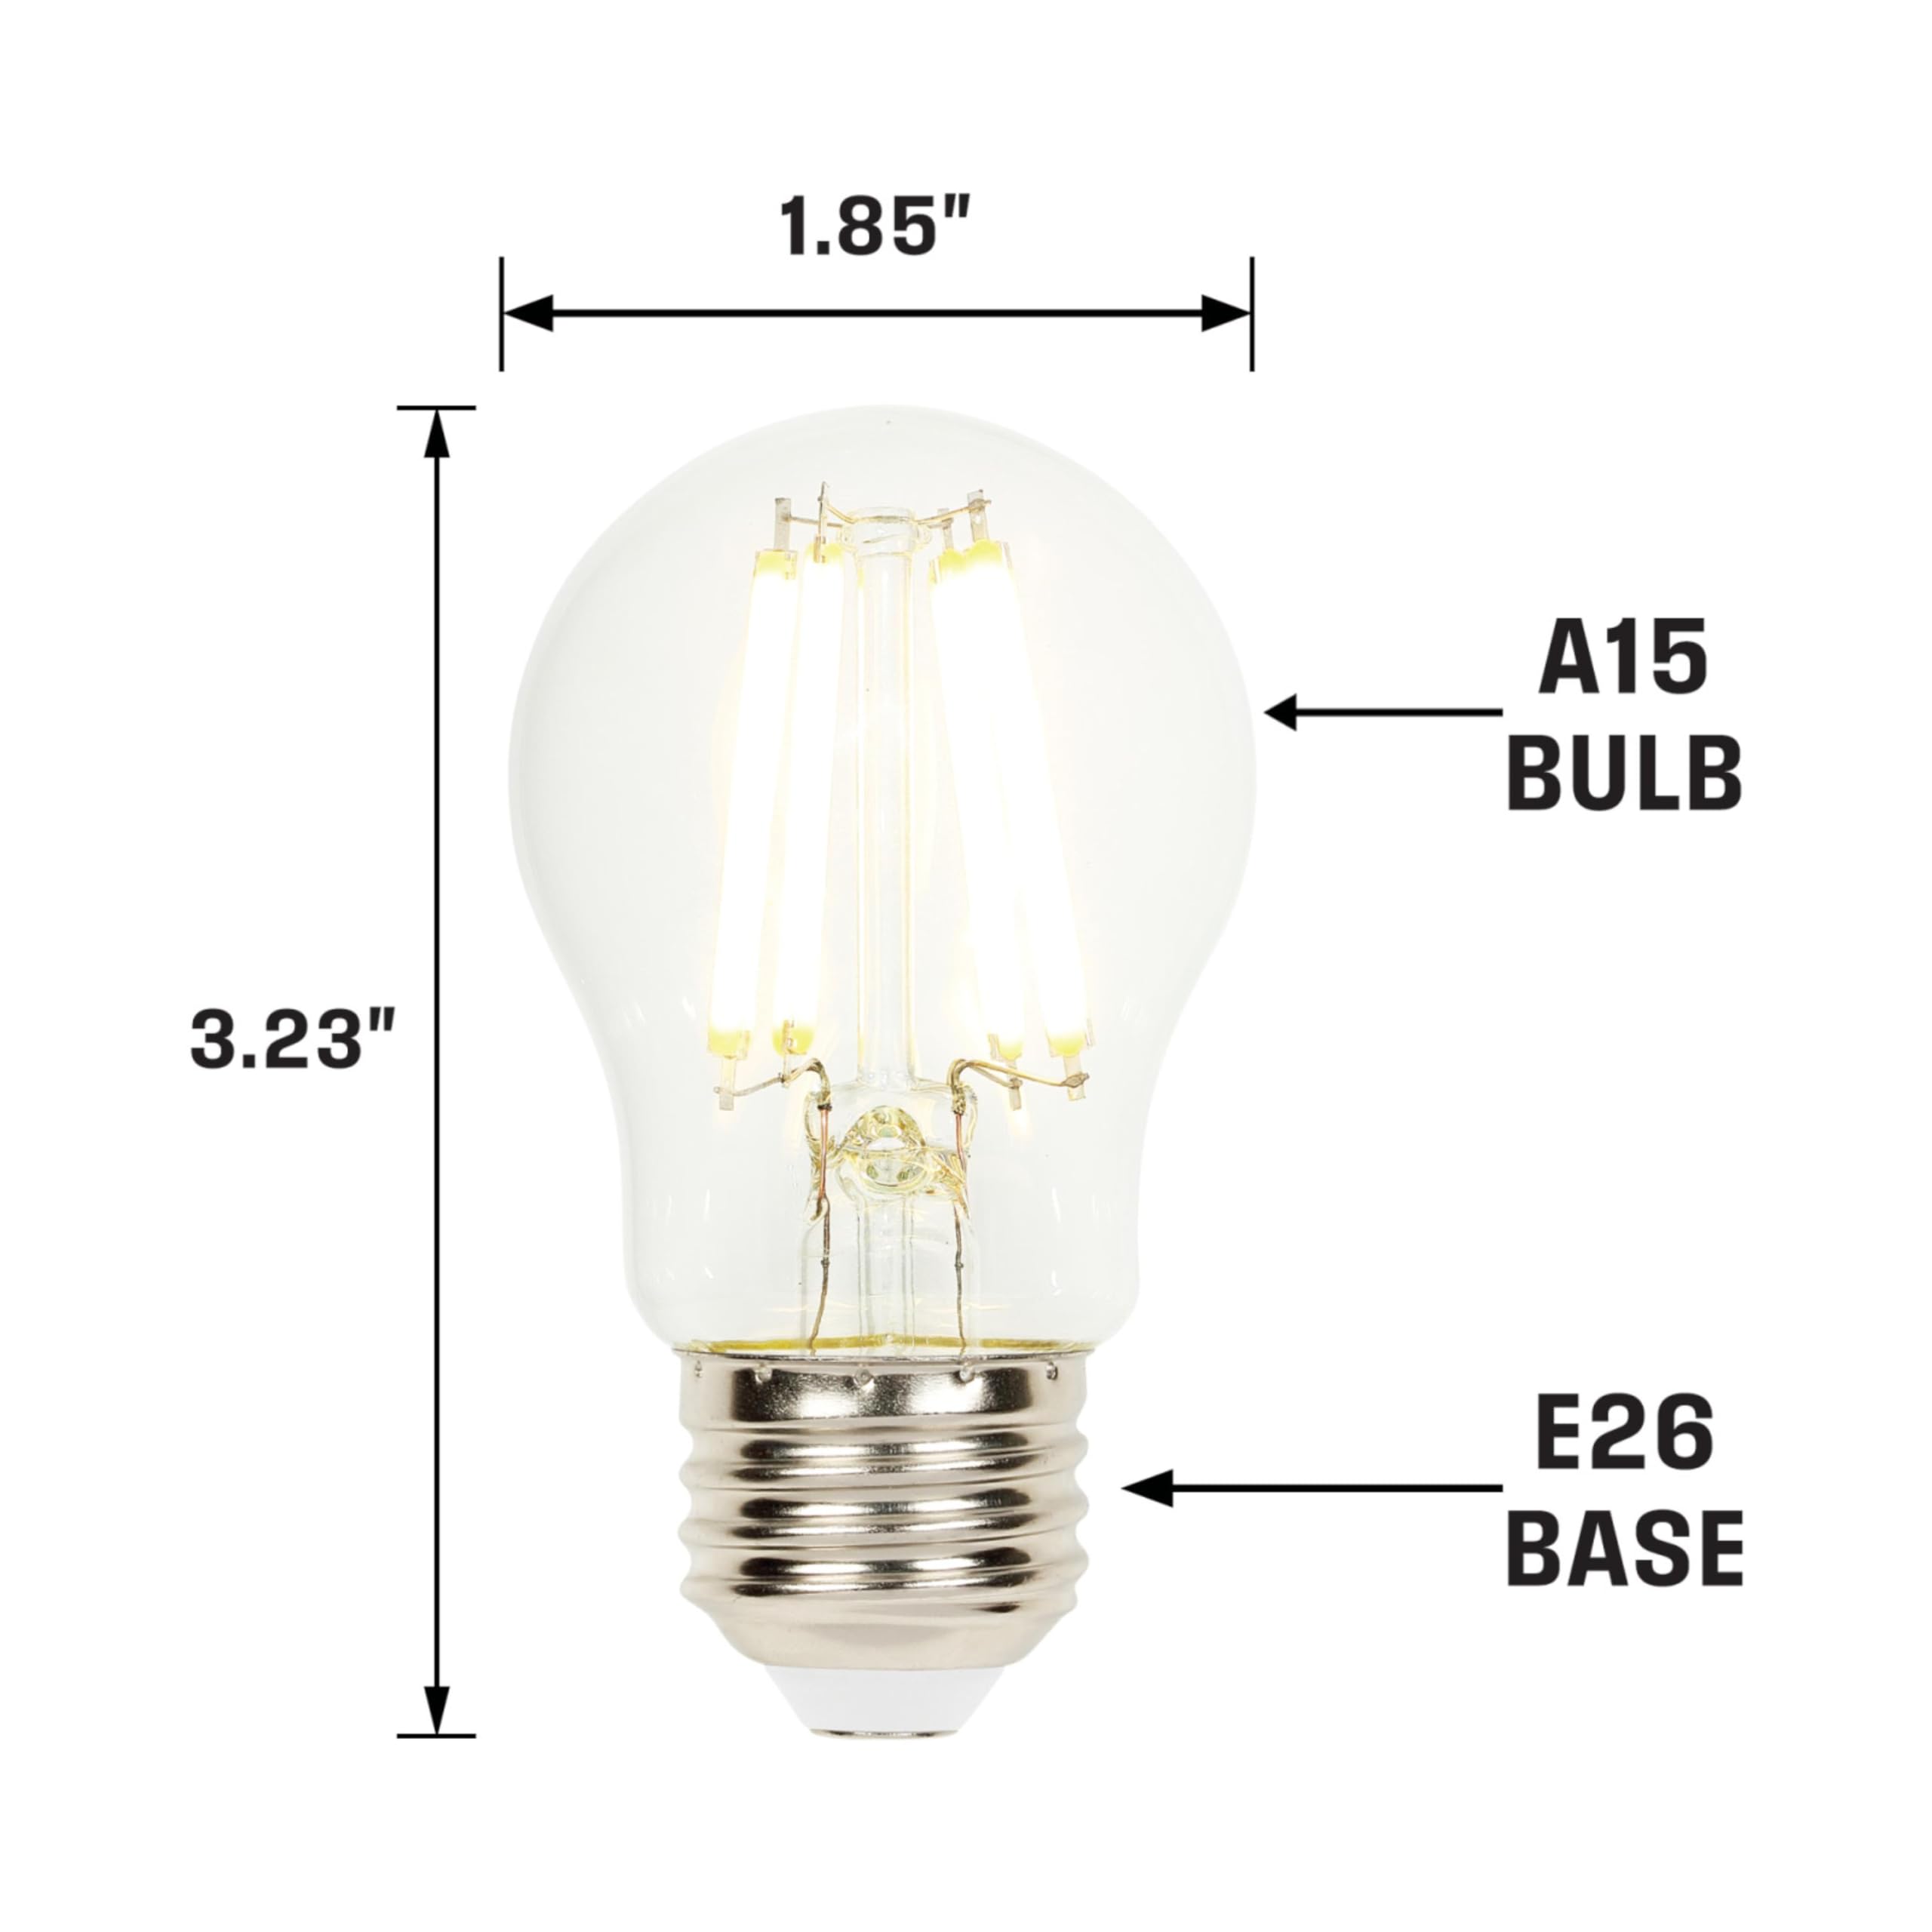 Westinghouse Lighting 5279000 9 Watt (100 Watt Equivalent) A15 Dimmable Clear Filament LED Light Bulb, Medium Base